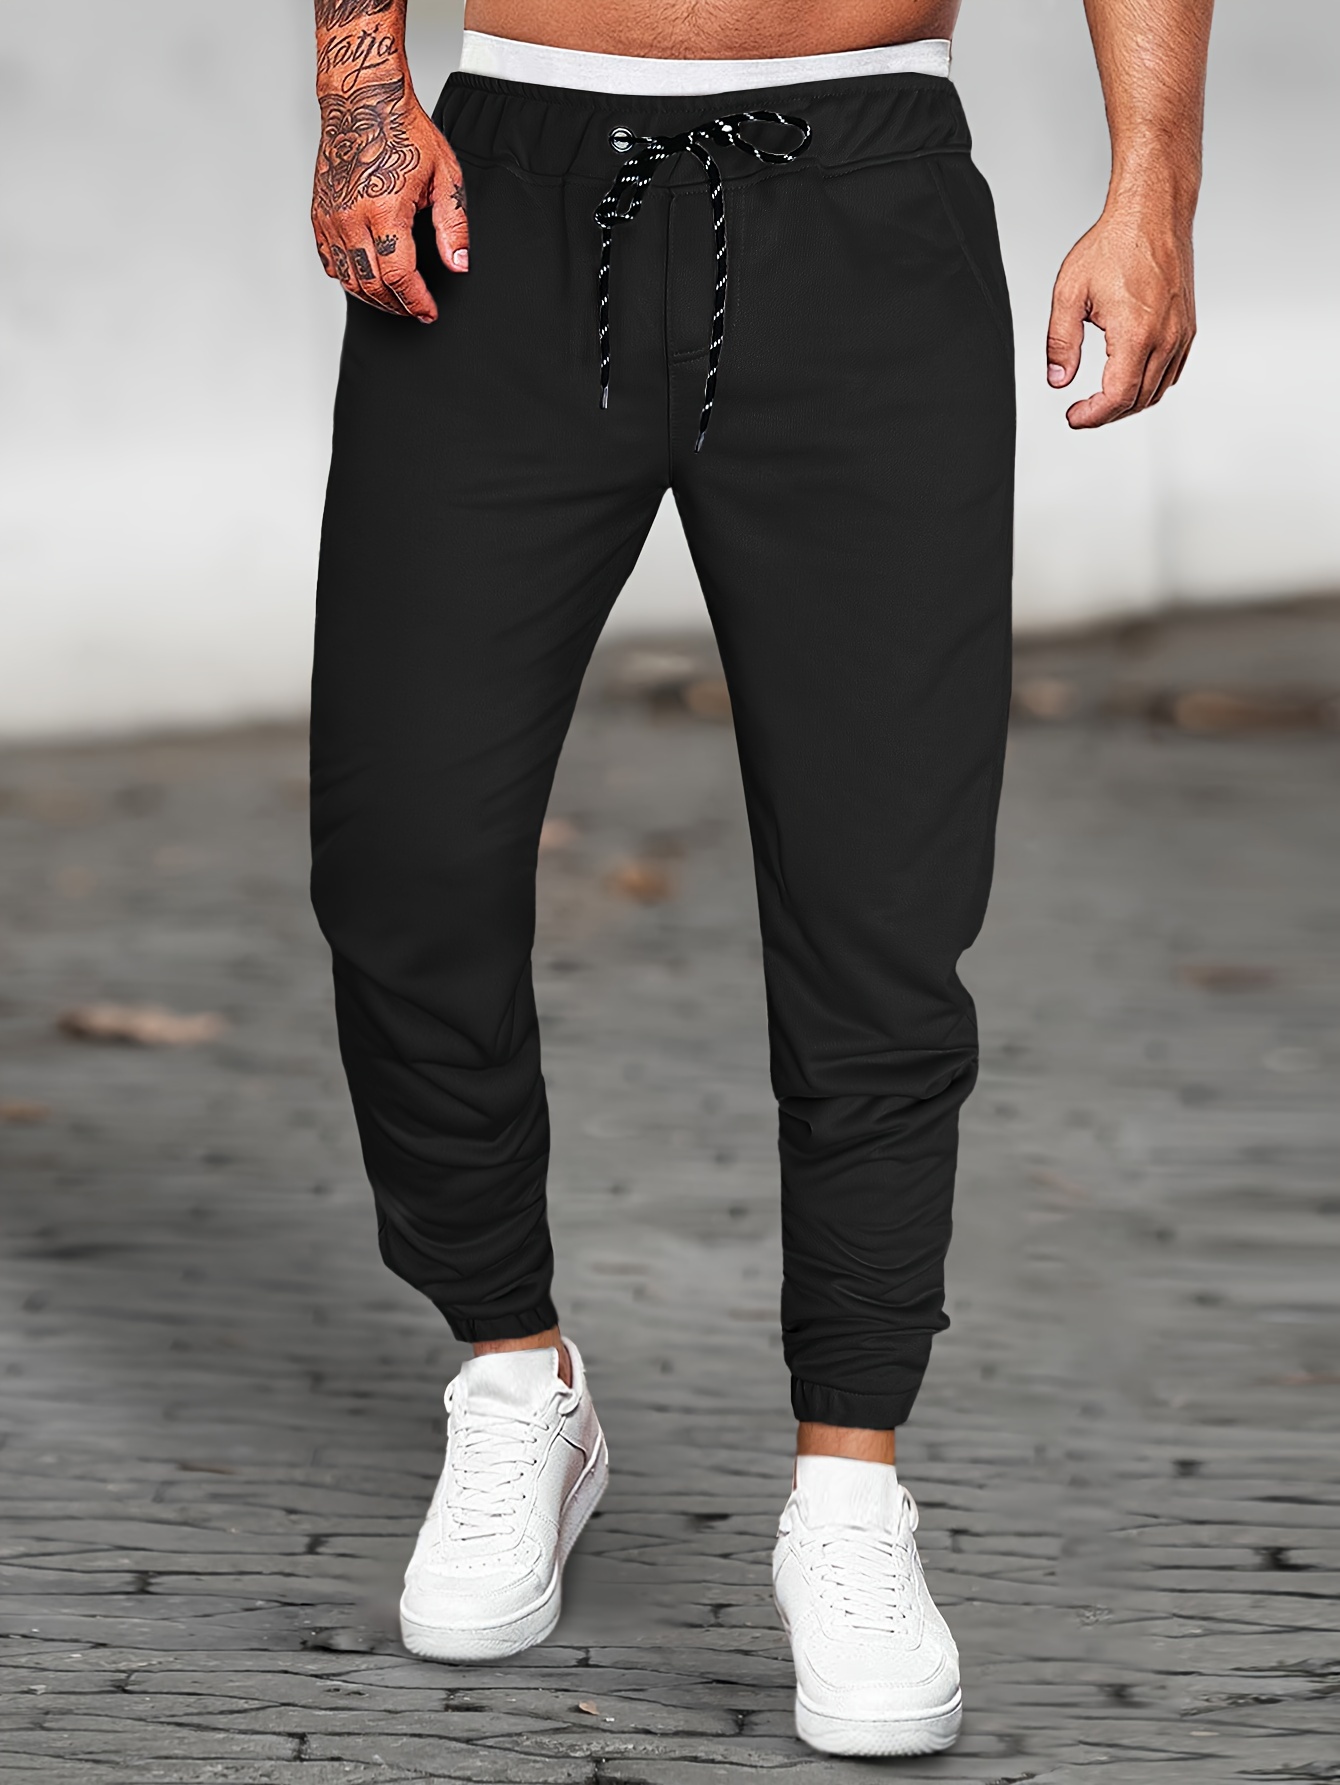 Men's Fashion Casual Black Straight Leg Pants